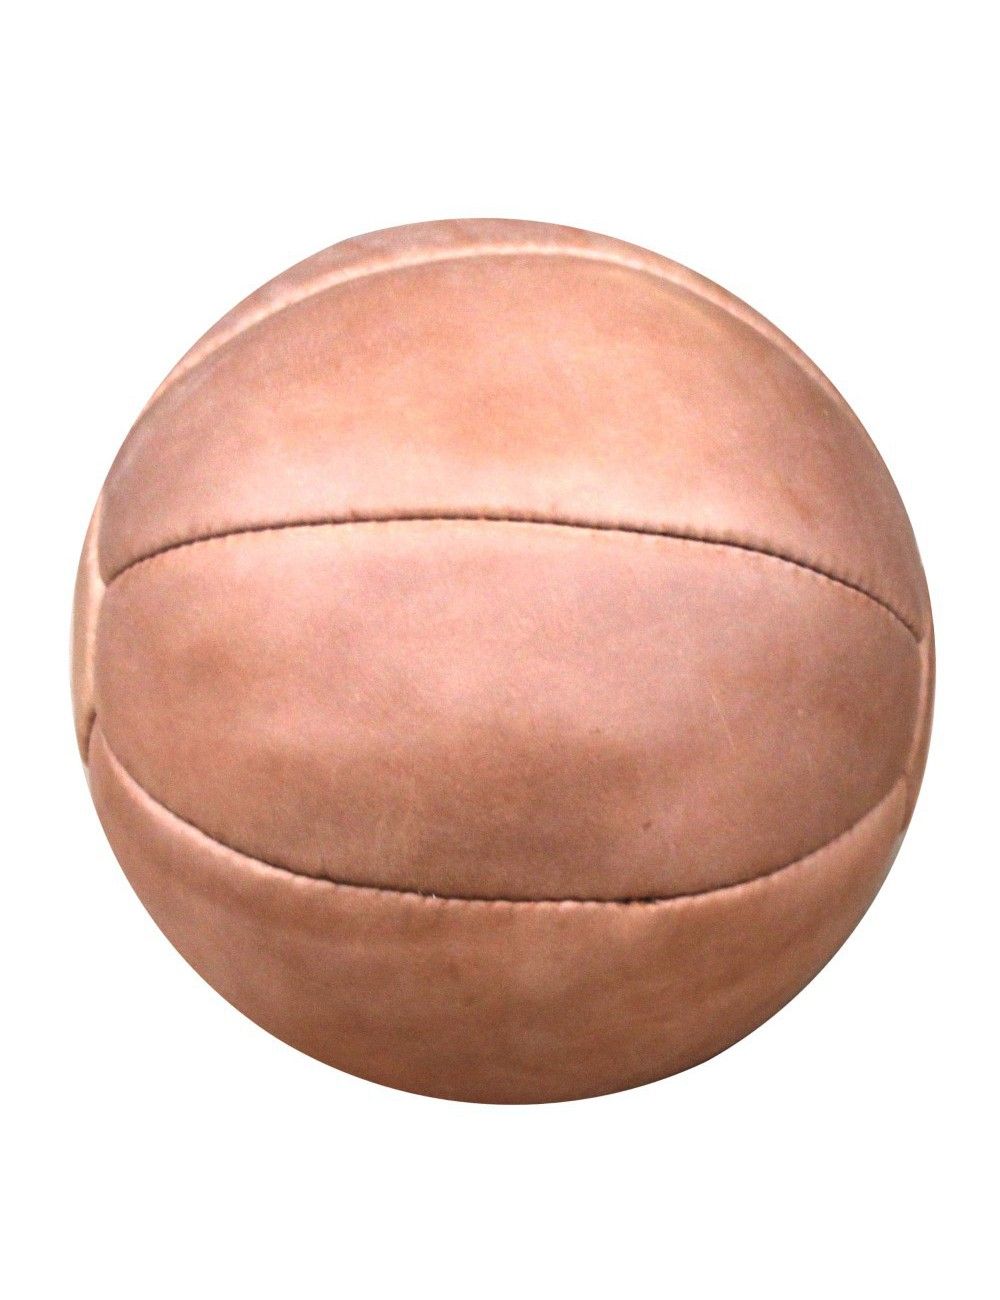 Leder-Medizinball 2 kg - 1